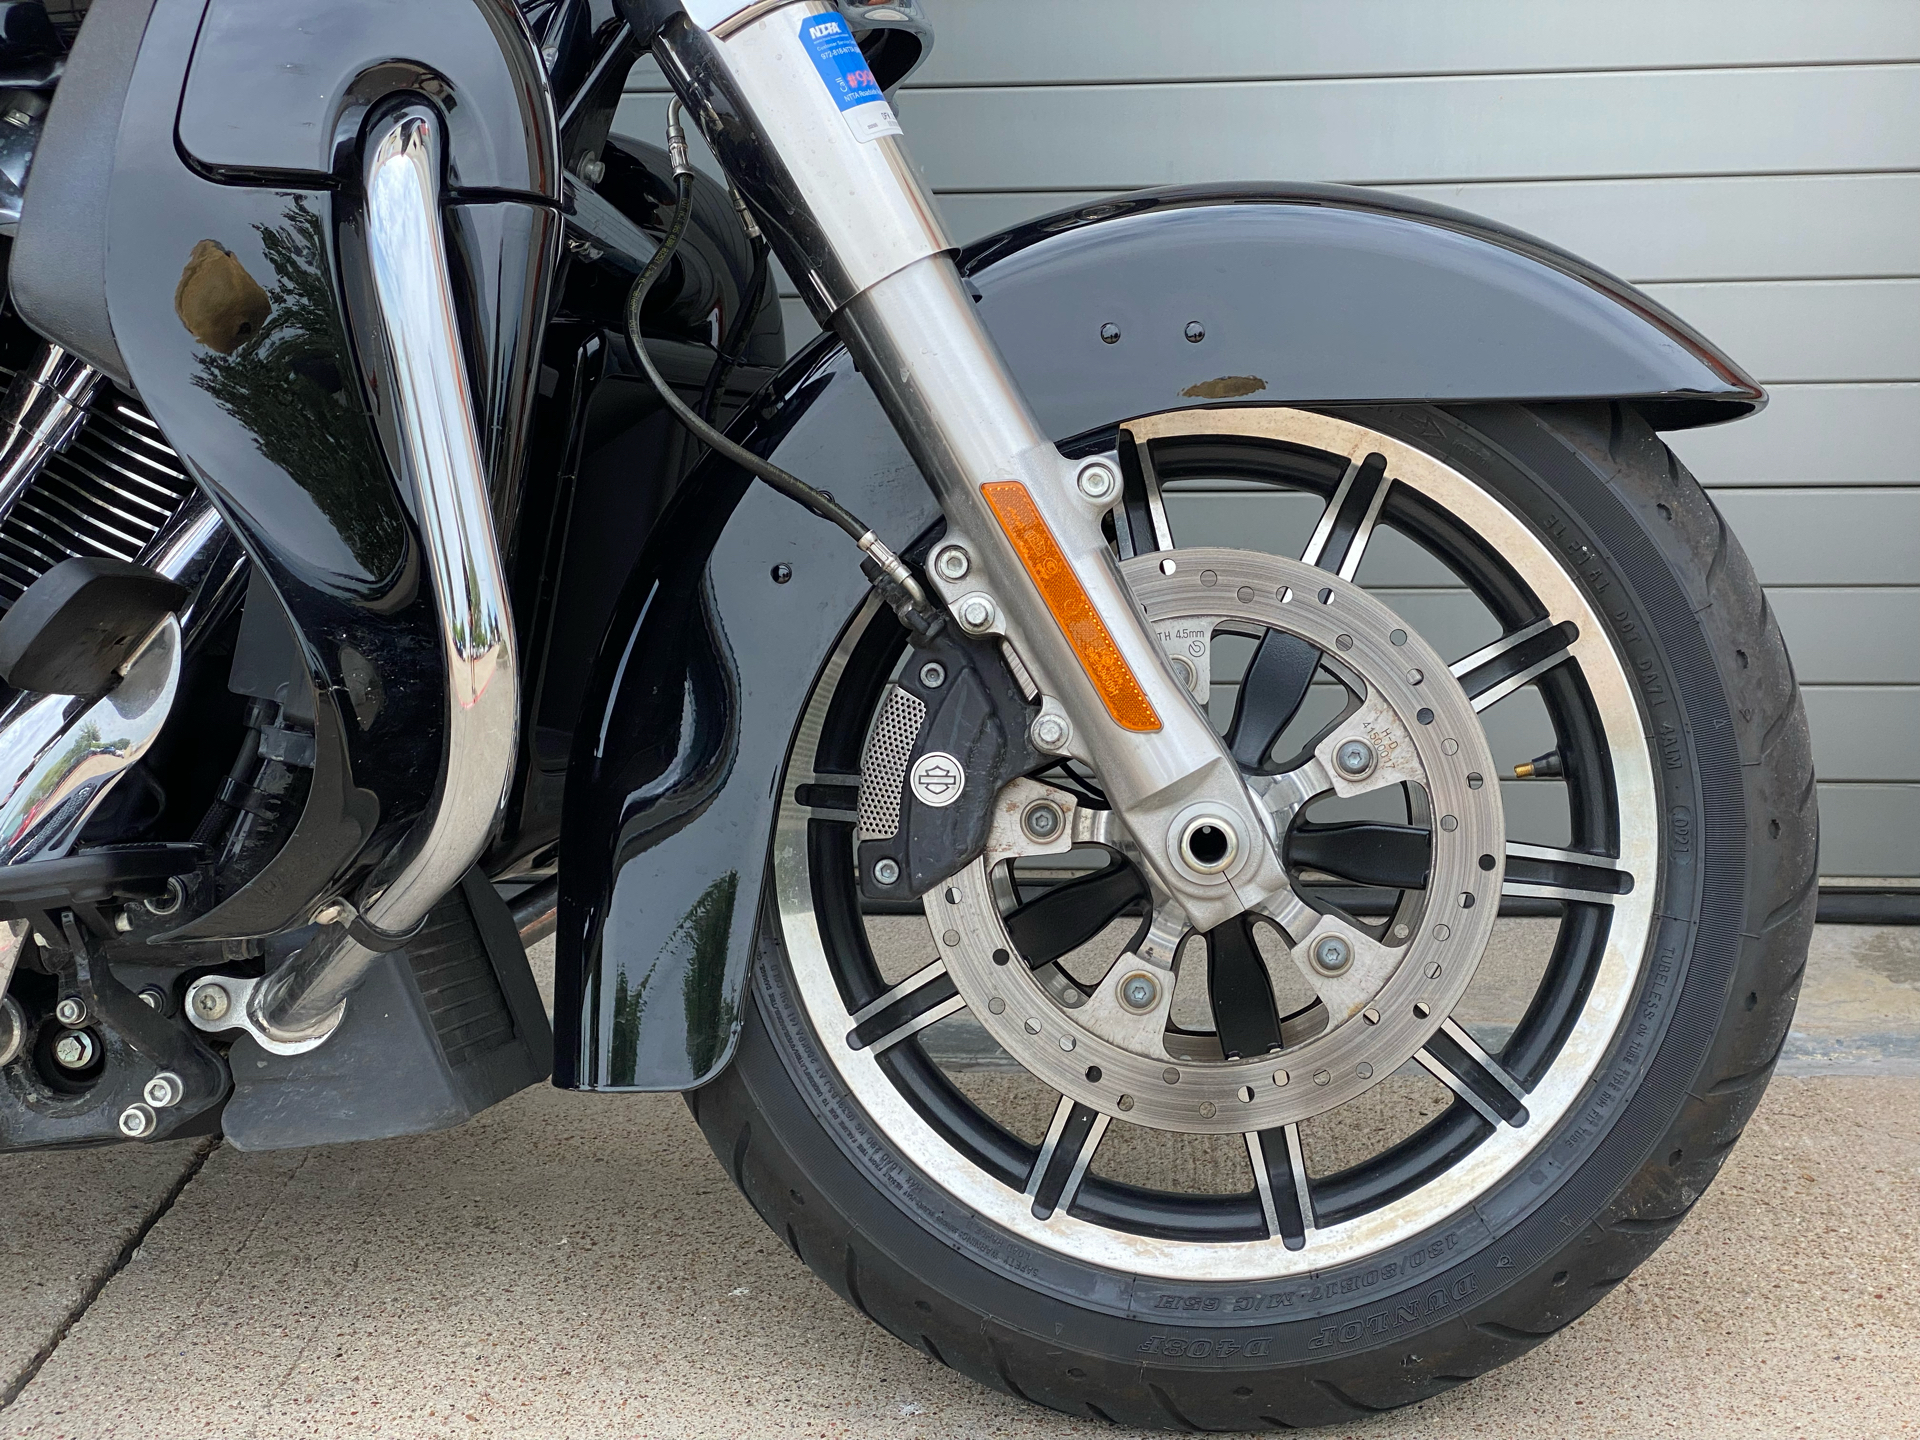 2021 Harley-Davidson Electra Glide® Standard in Grand Prairie, Texas - Photo 4